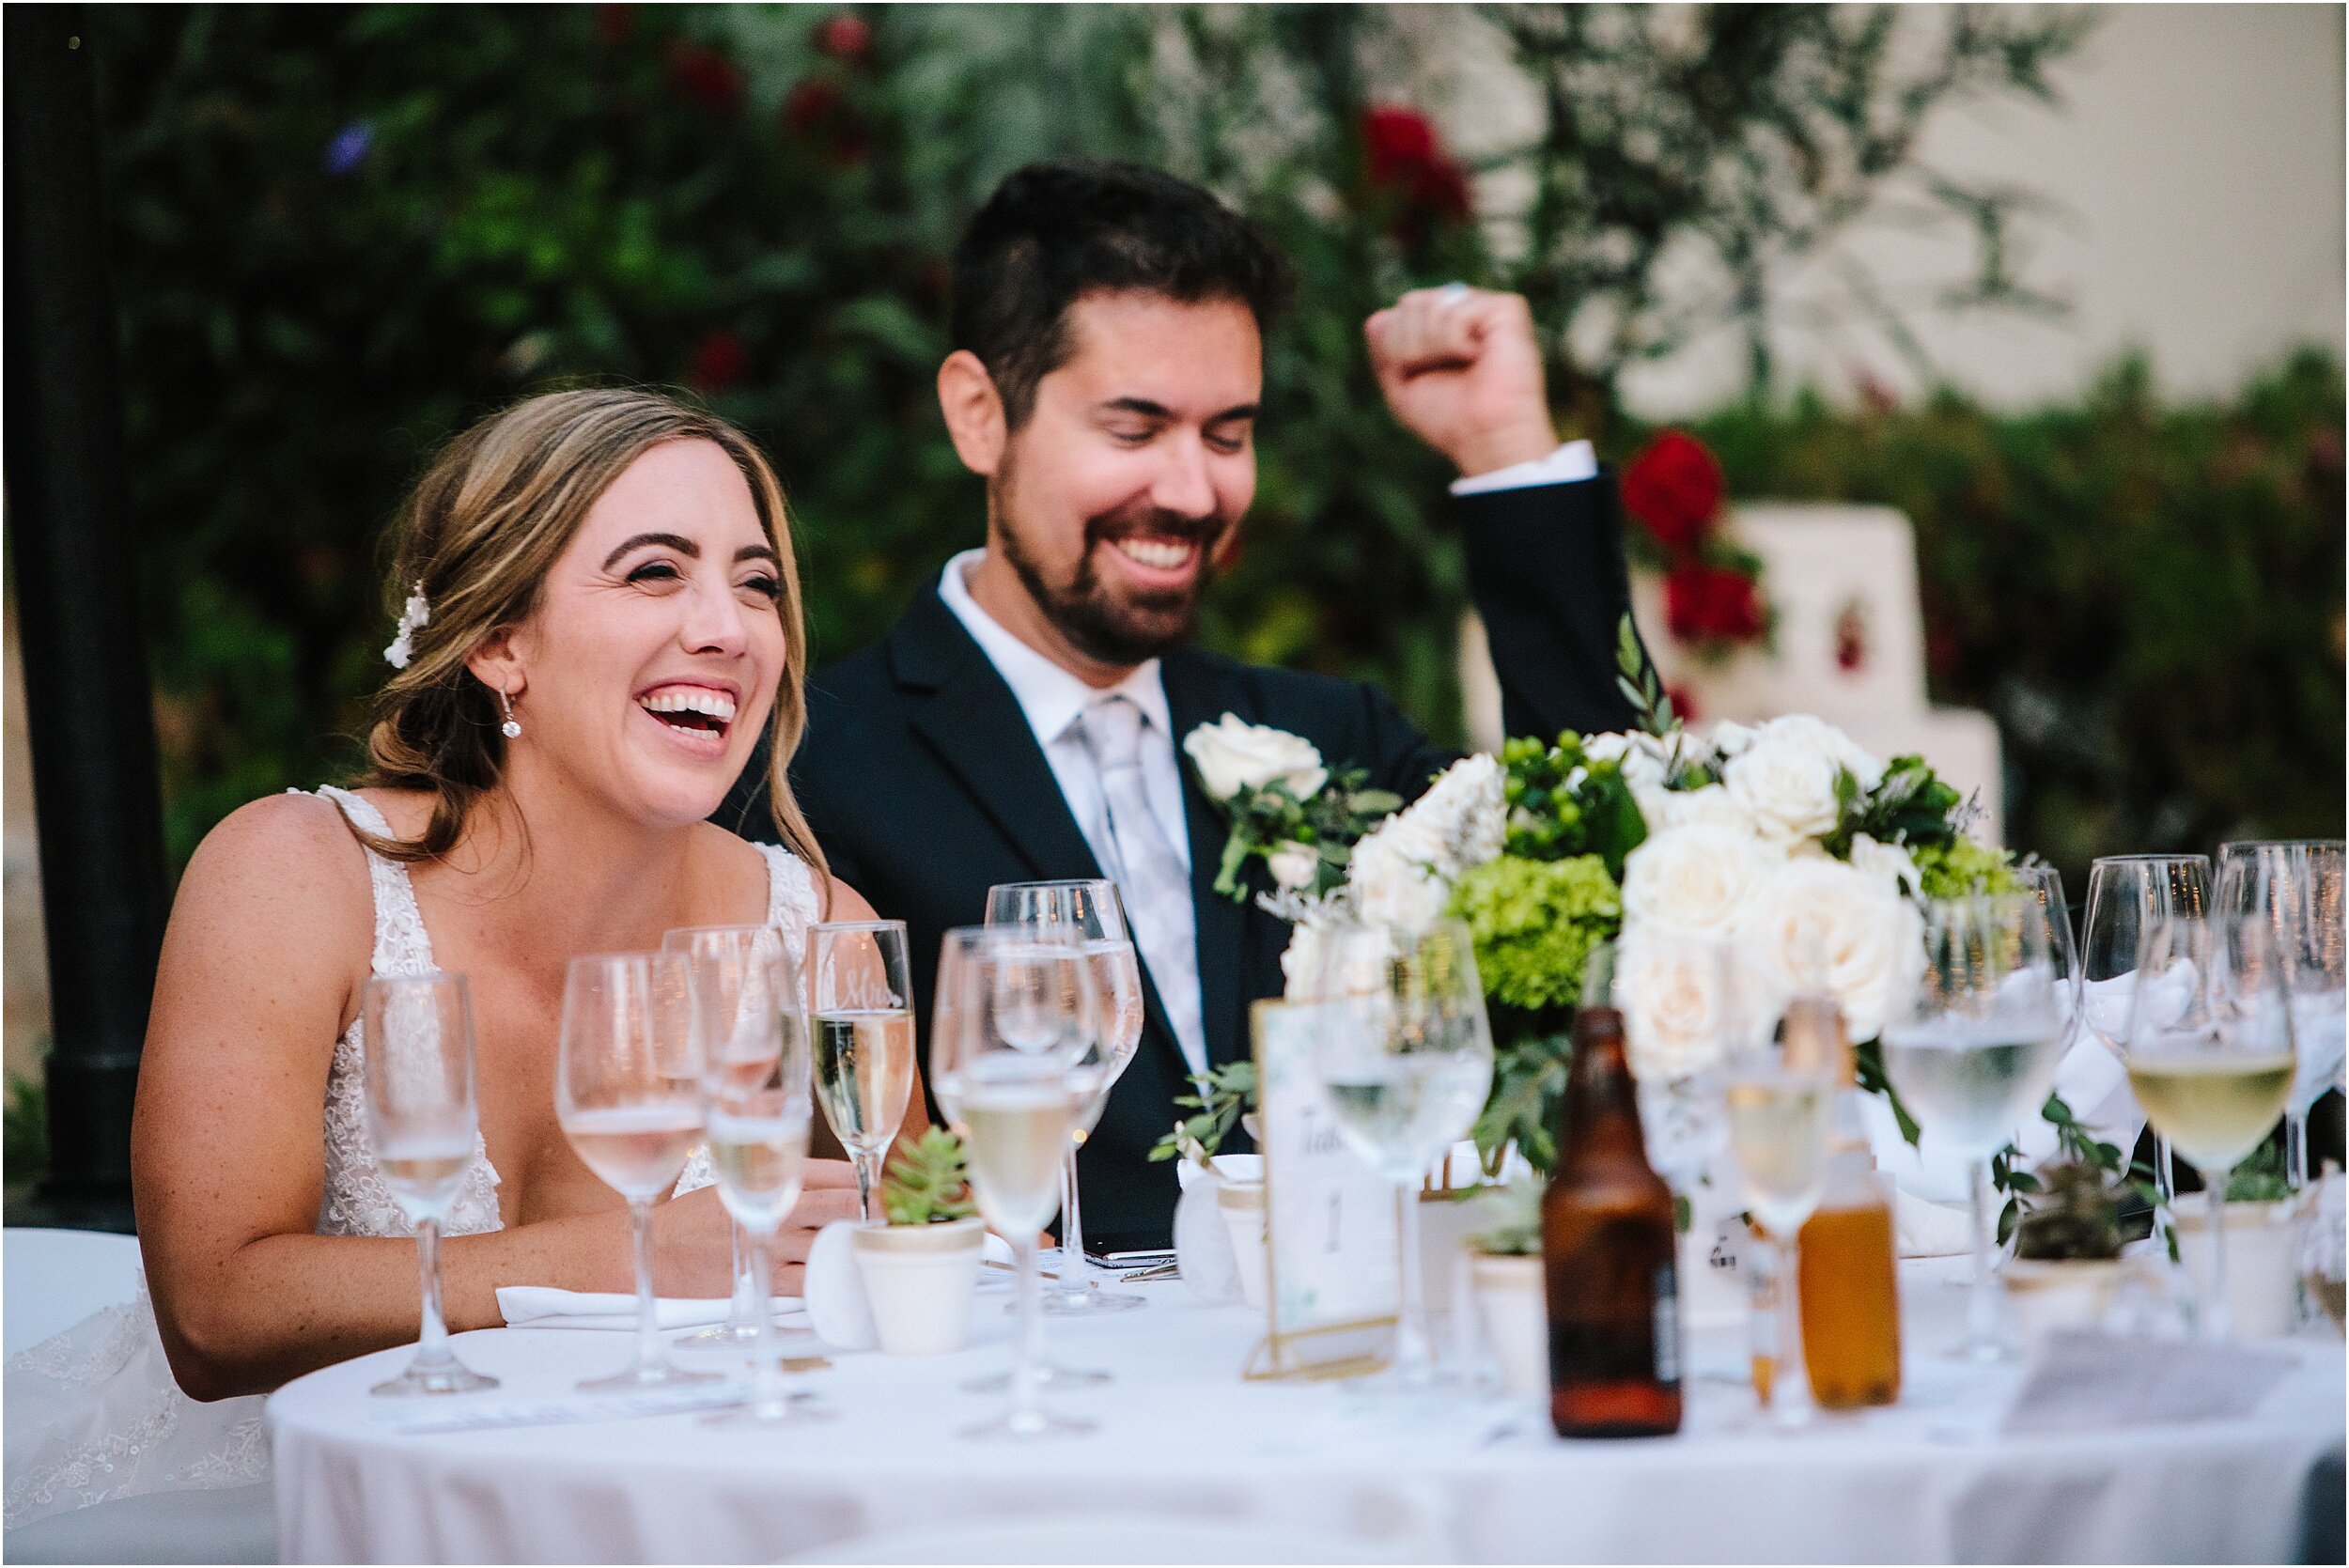 Caitlin and jason | Small Malibu Wedding | Malibu Elopement Photographer_0062.jpg